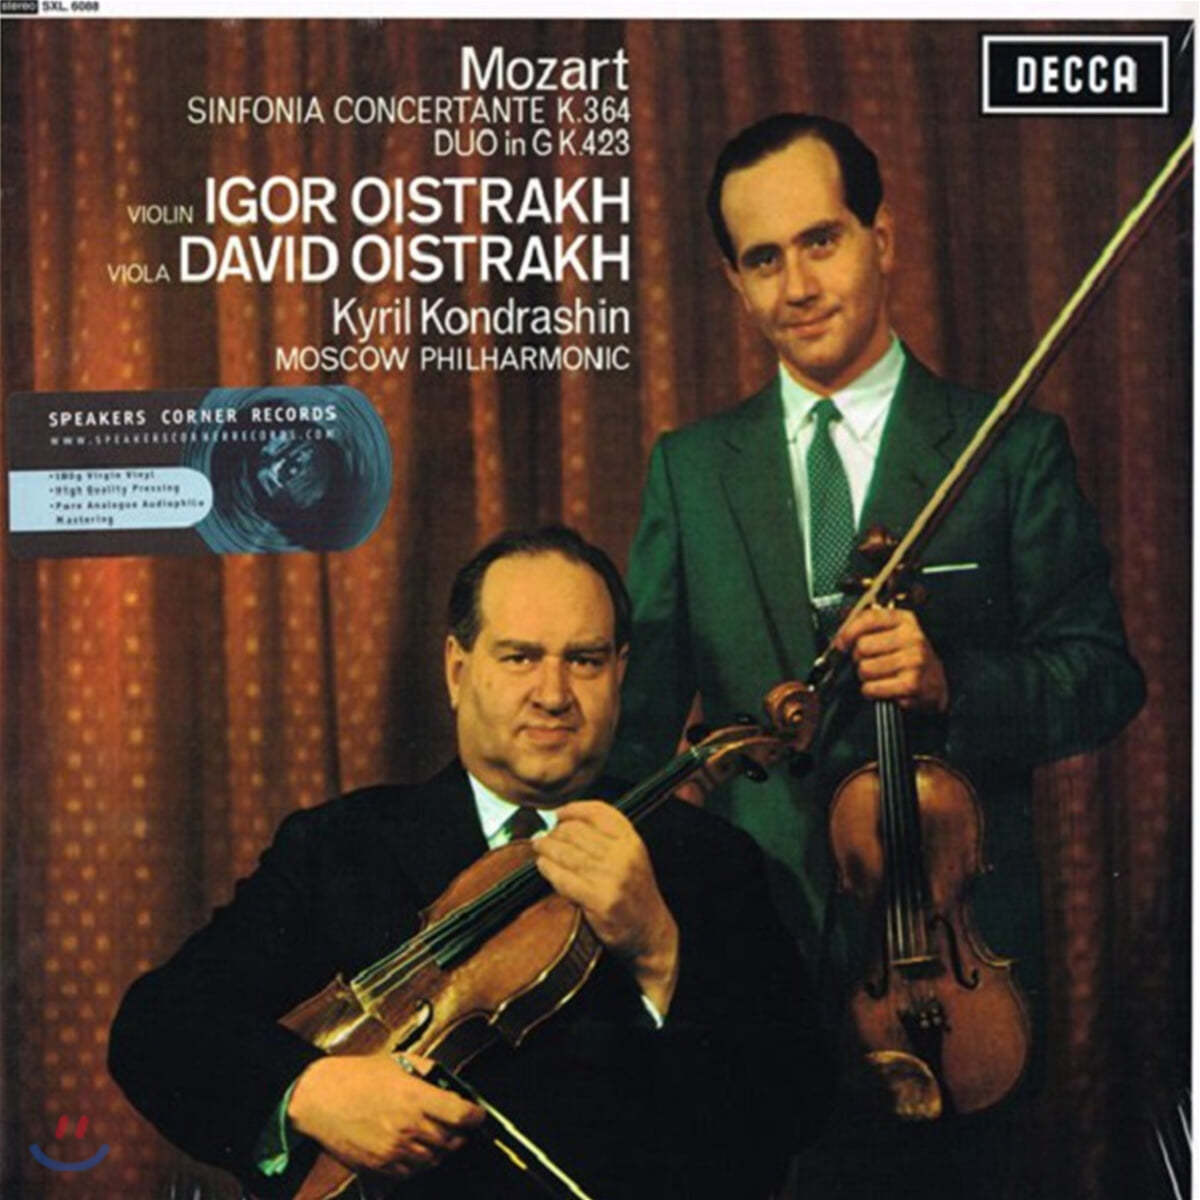 David and Igor Oistrakh 모차르트: 신포니아 콘체르탄테 (Mozart: Sinfonia concertante) [LP]